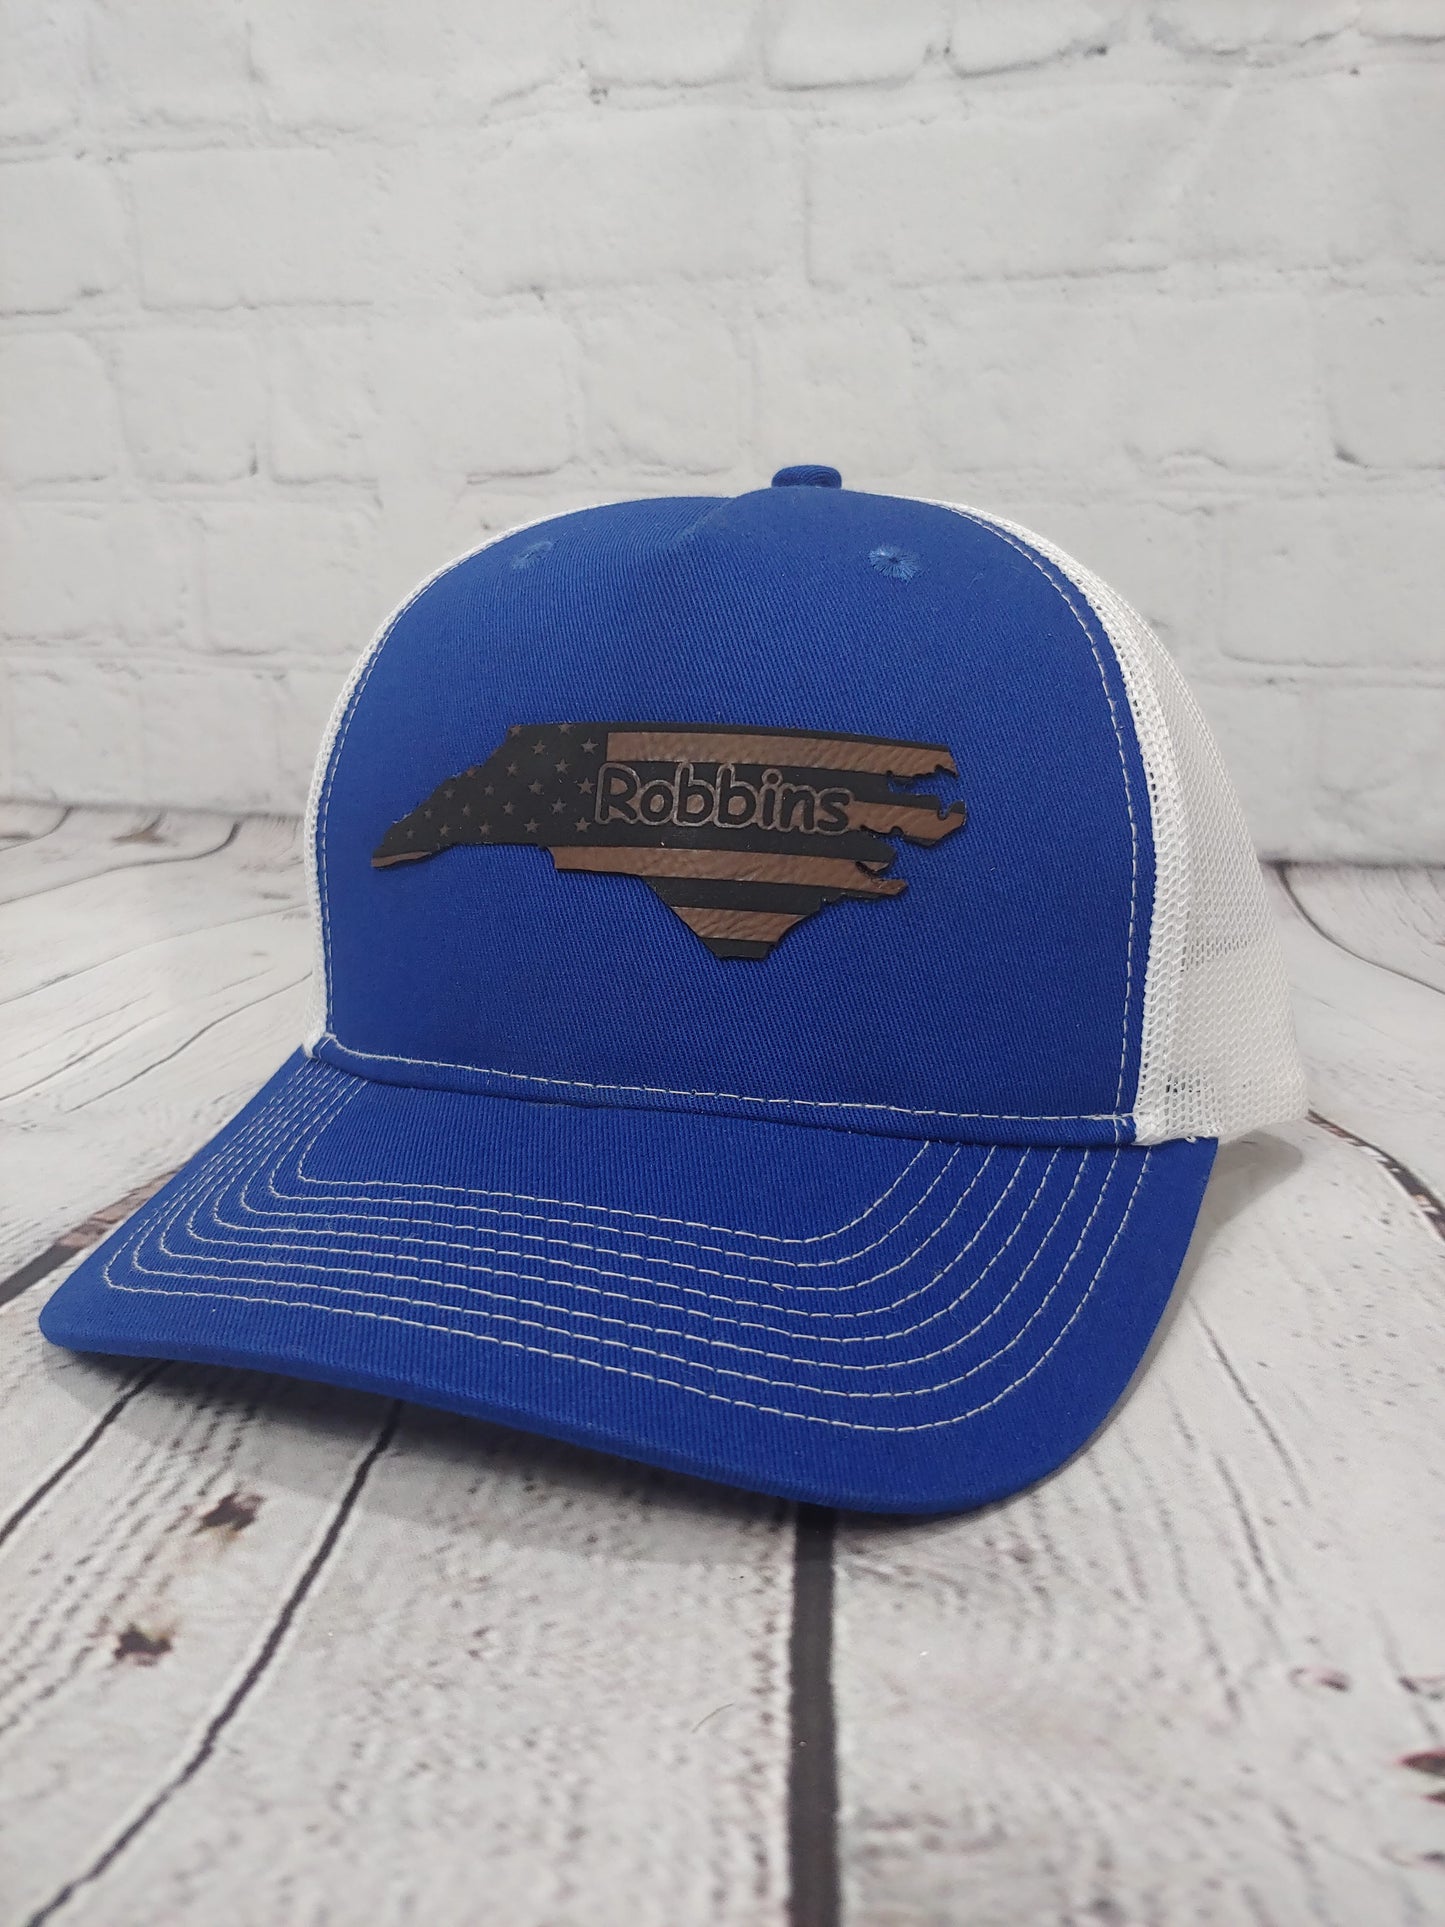 Hometown Proud Robbins NC Snapback Trucker Hat